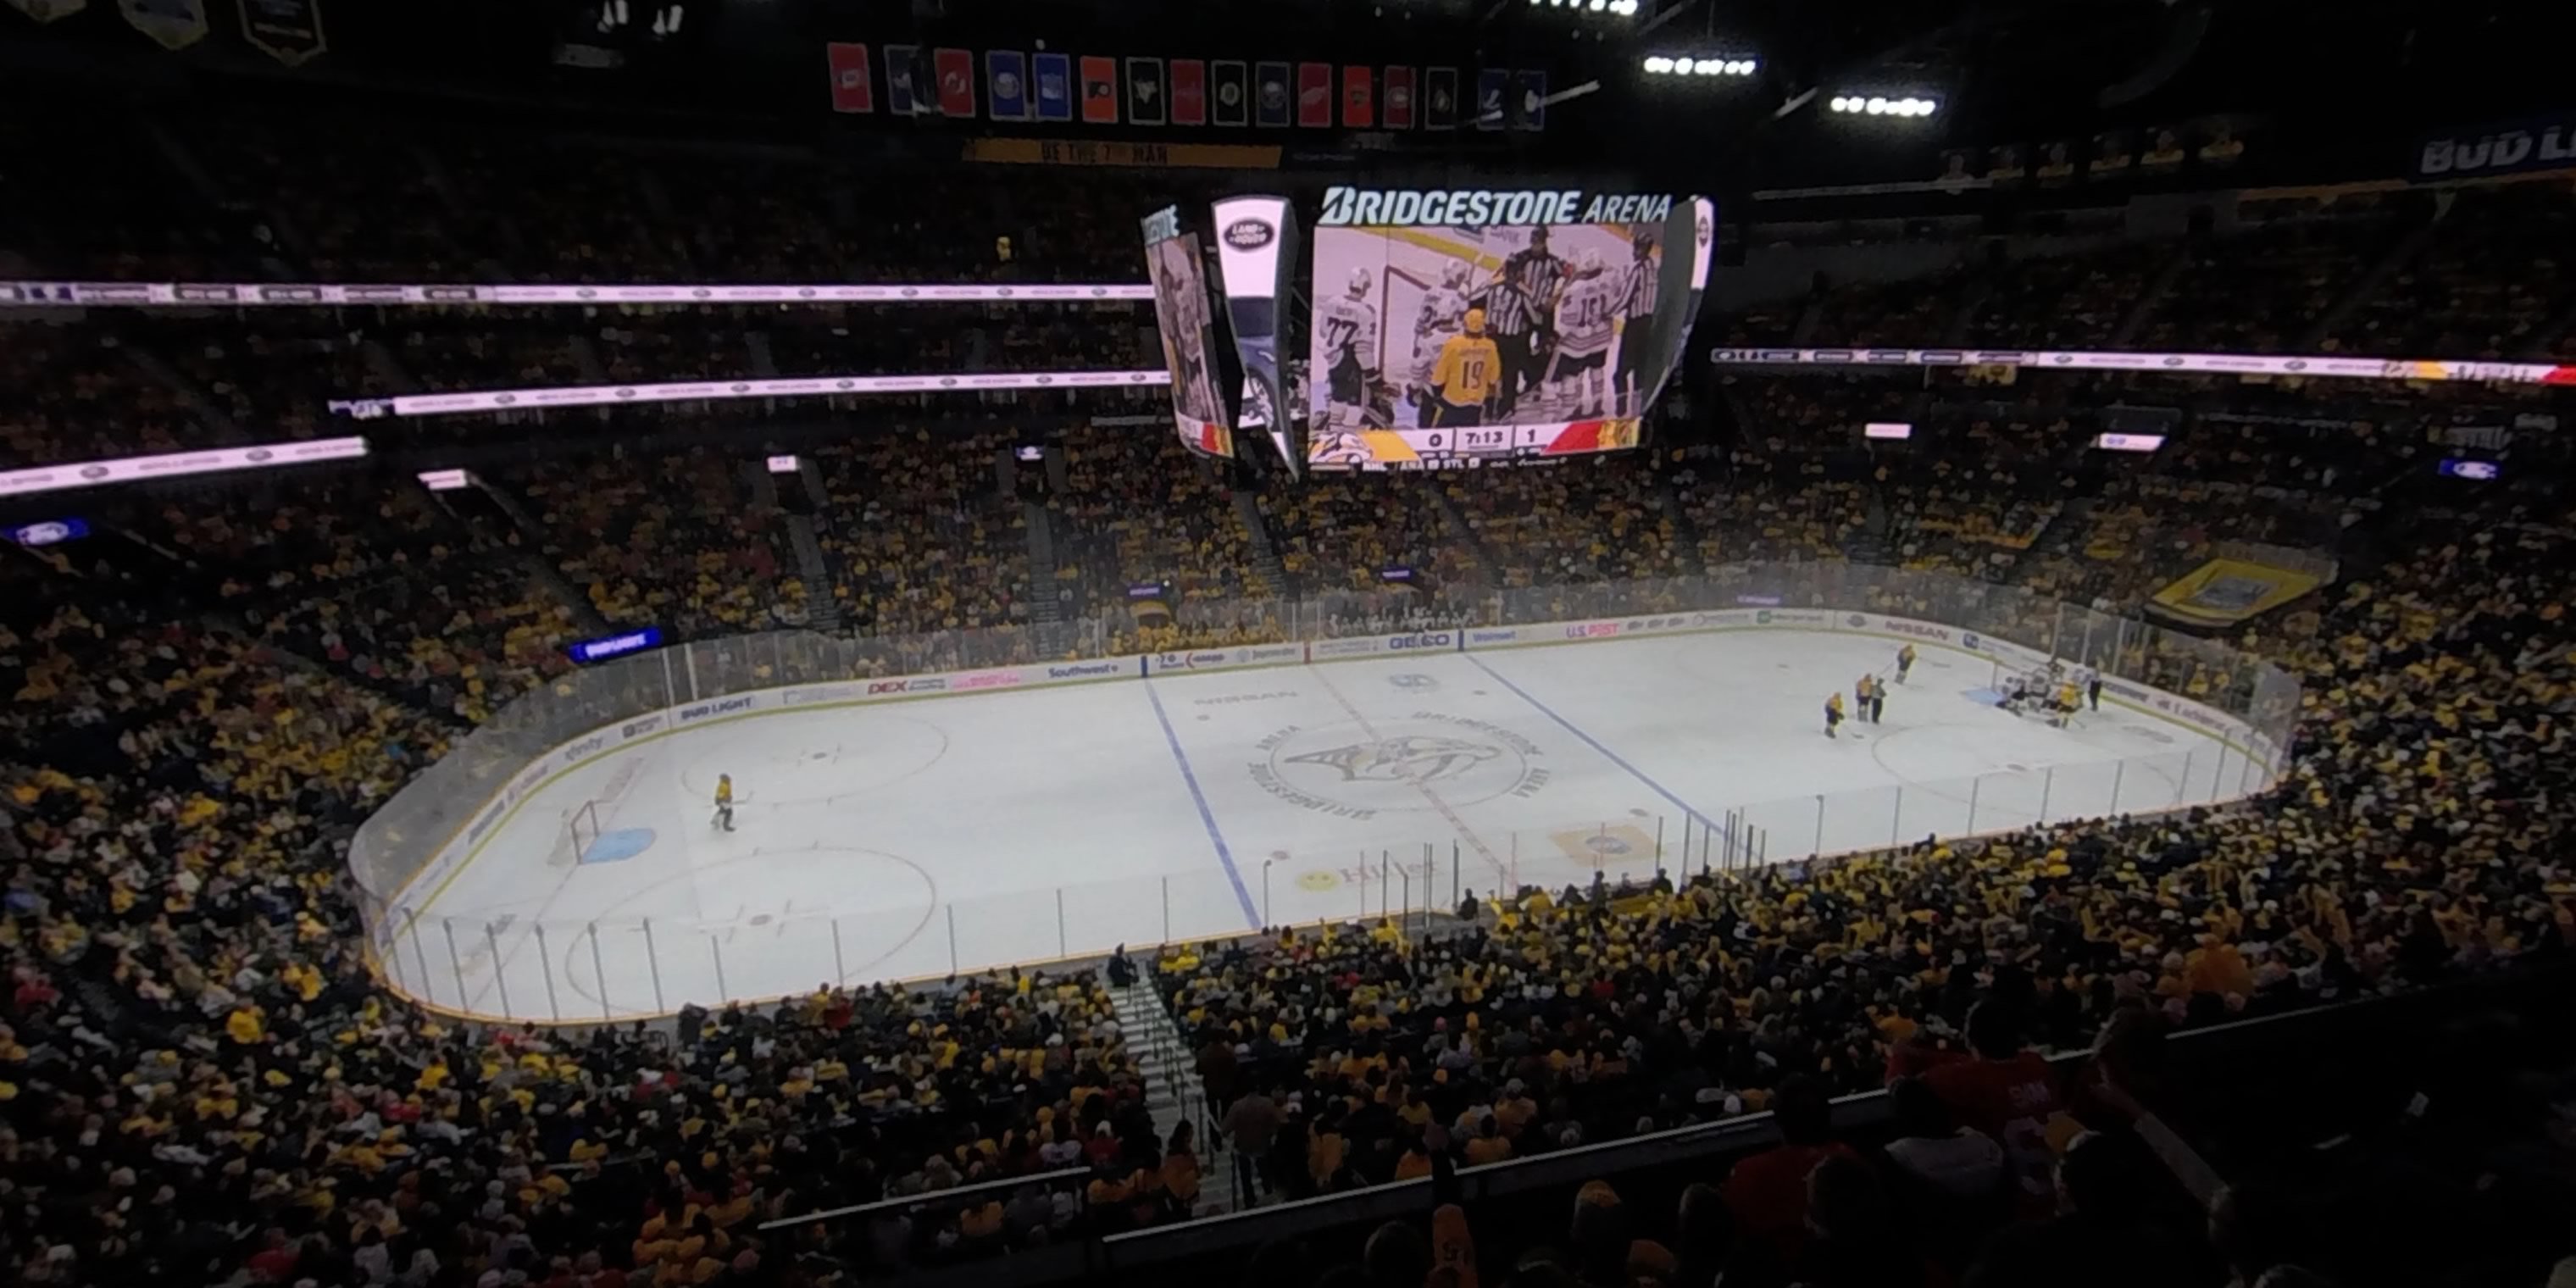 section 207 panoramic seat view  for hockey - bridgestone arena